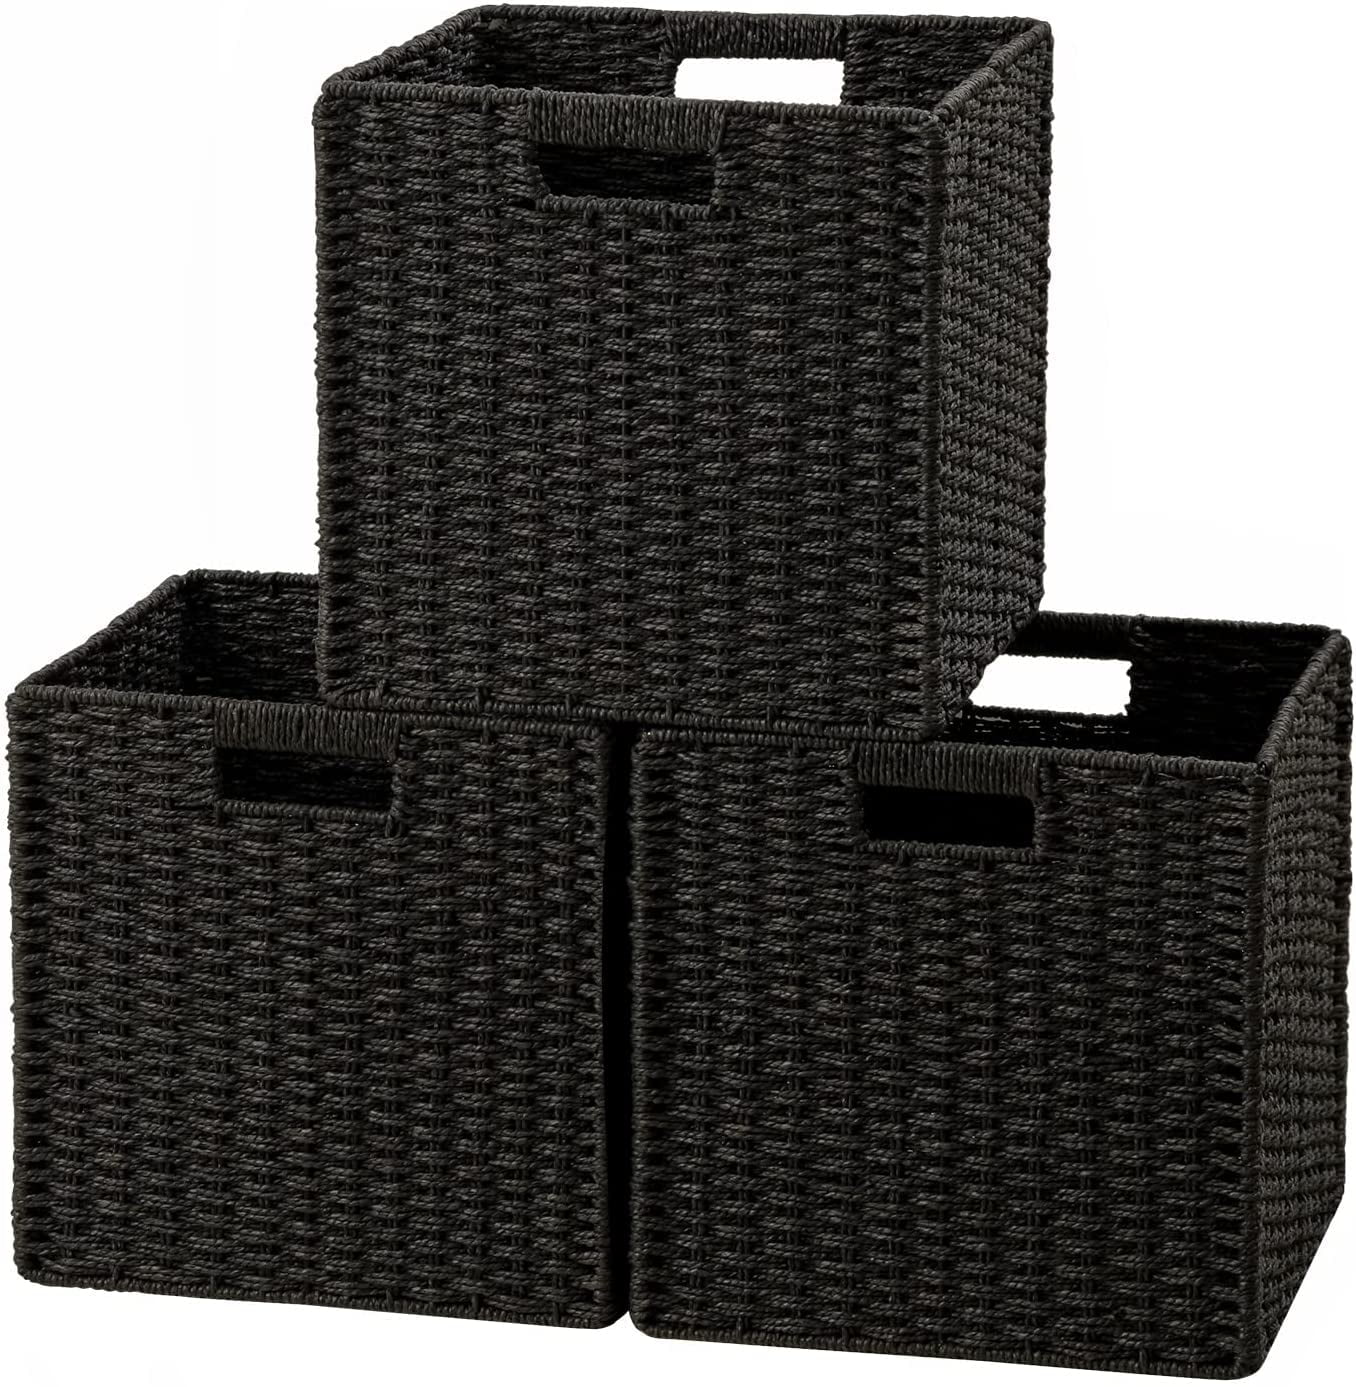 Home-Complete Set of 2 Storage Bins - Basket Set for Toy, Kitchen, Closet, and Bathroom Storage Organizers with Handles (Black)